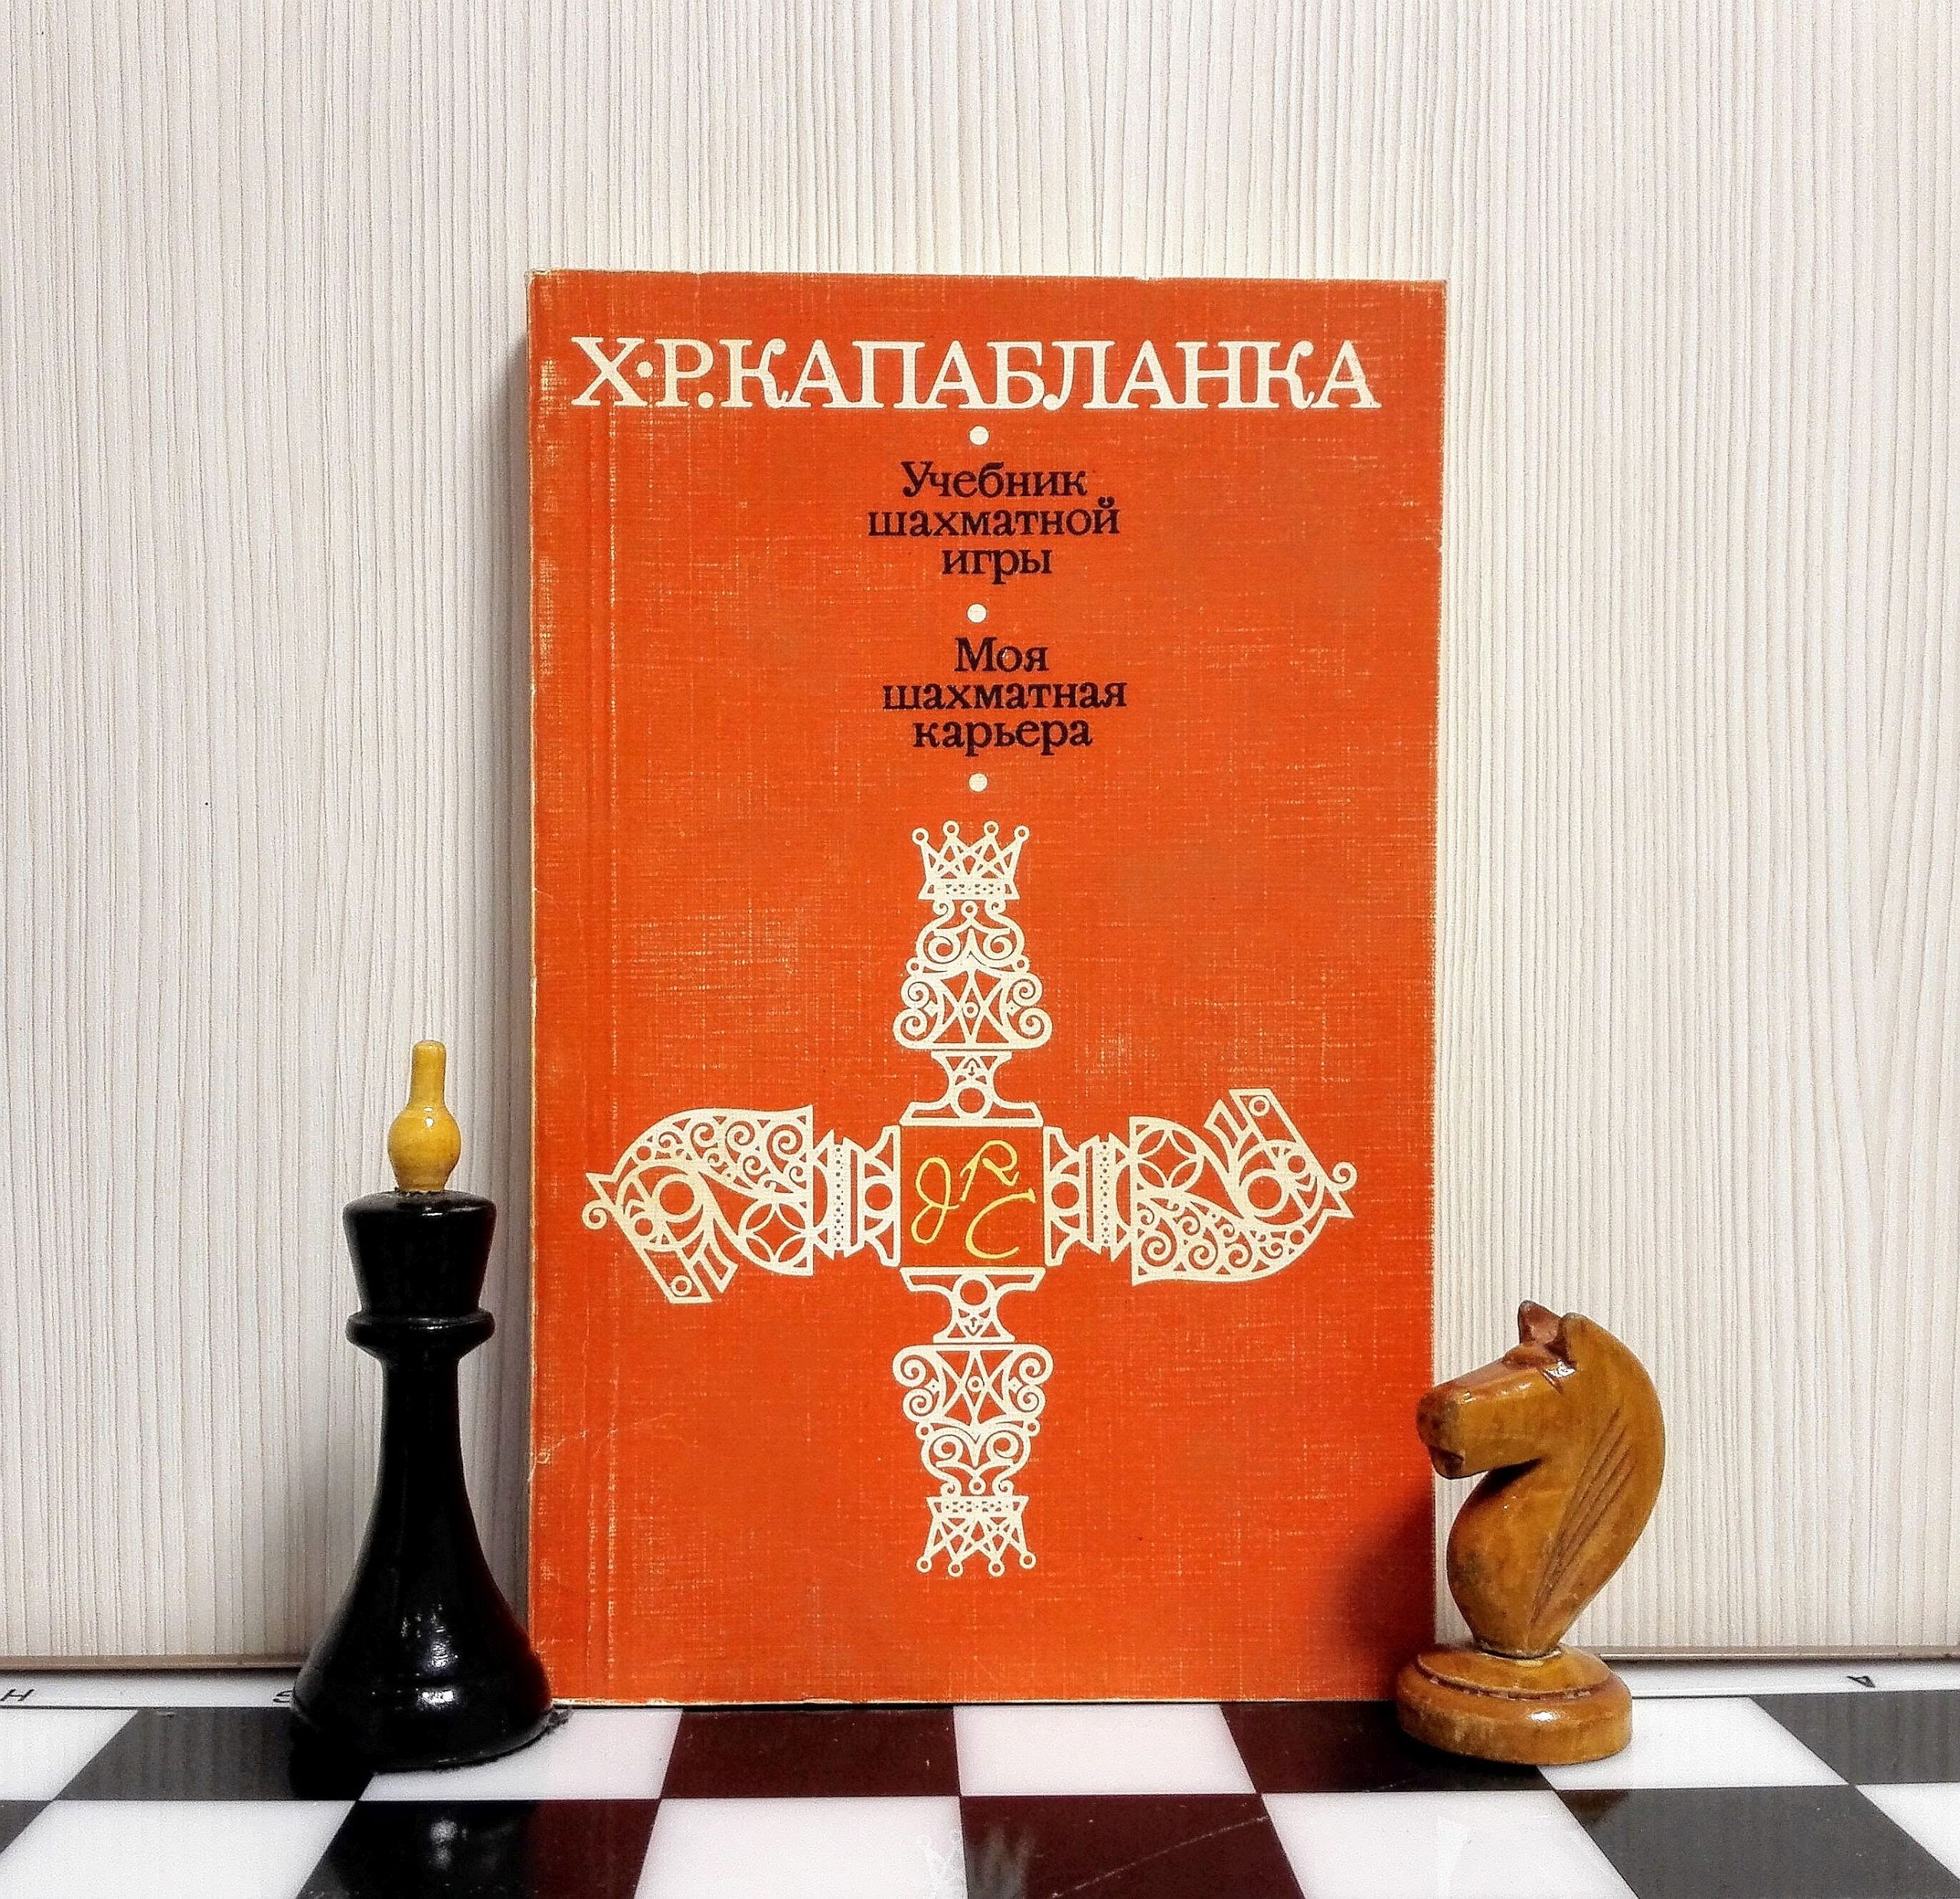 Vintage Soviet Chess Book Capablanca. Russian chess books